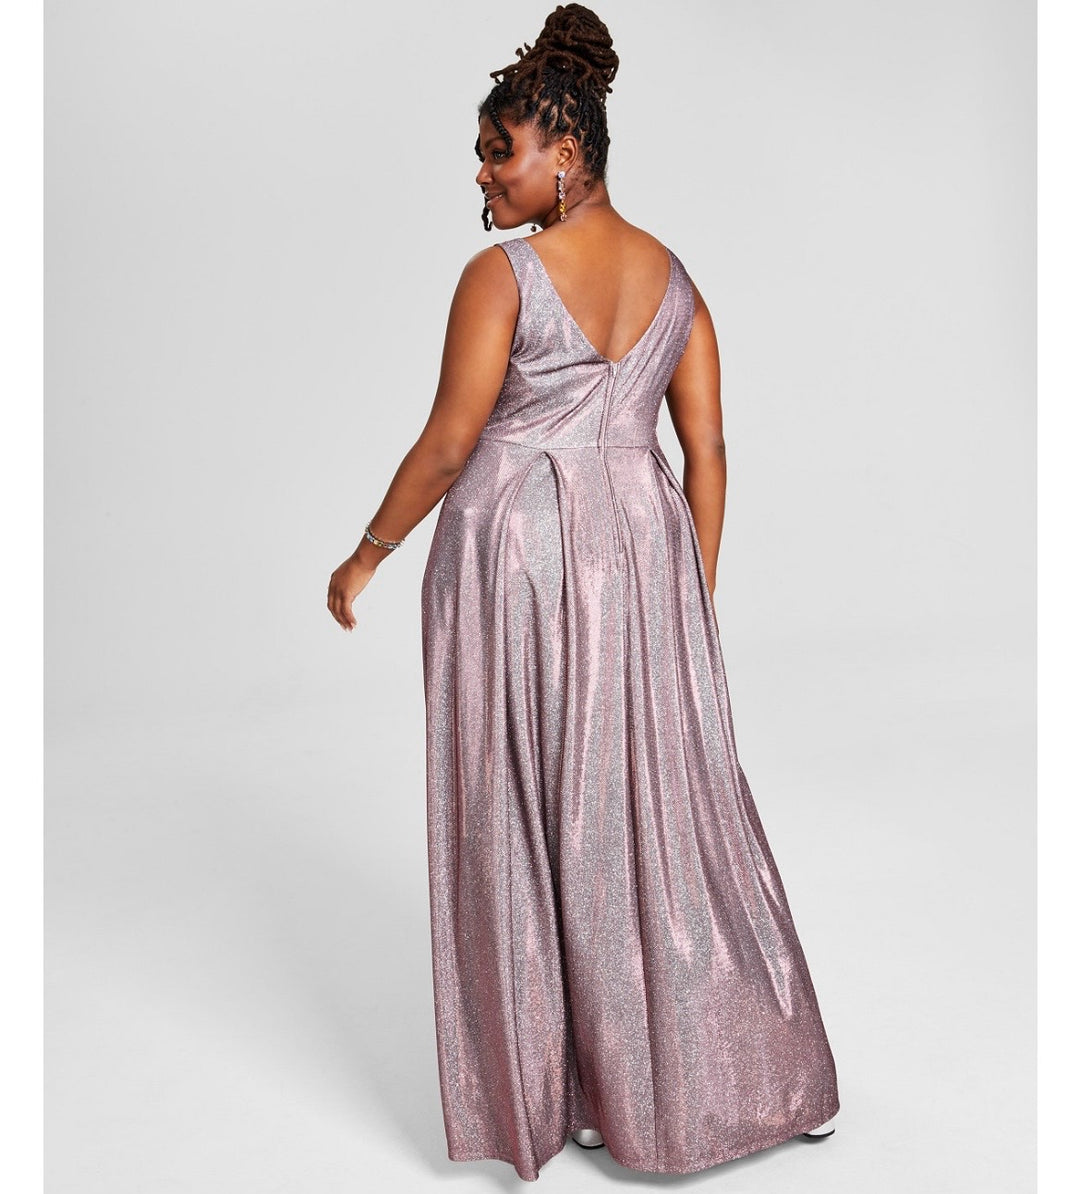 B Darlin Women's Metallic Prom Evening Dress Fuschia/Silver Plus Size 18W